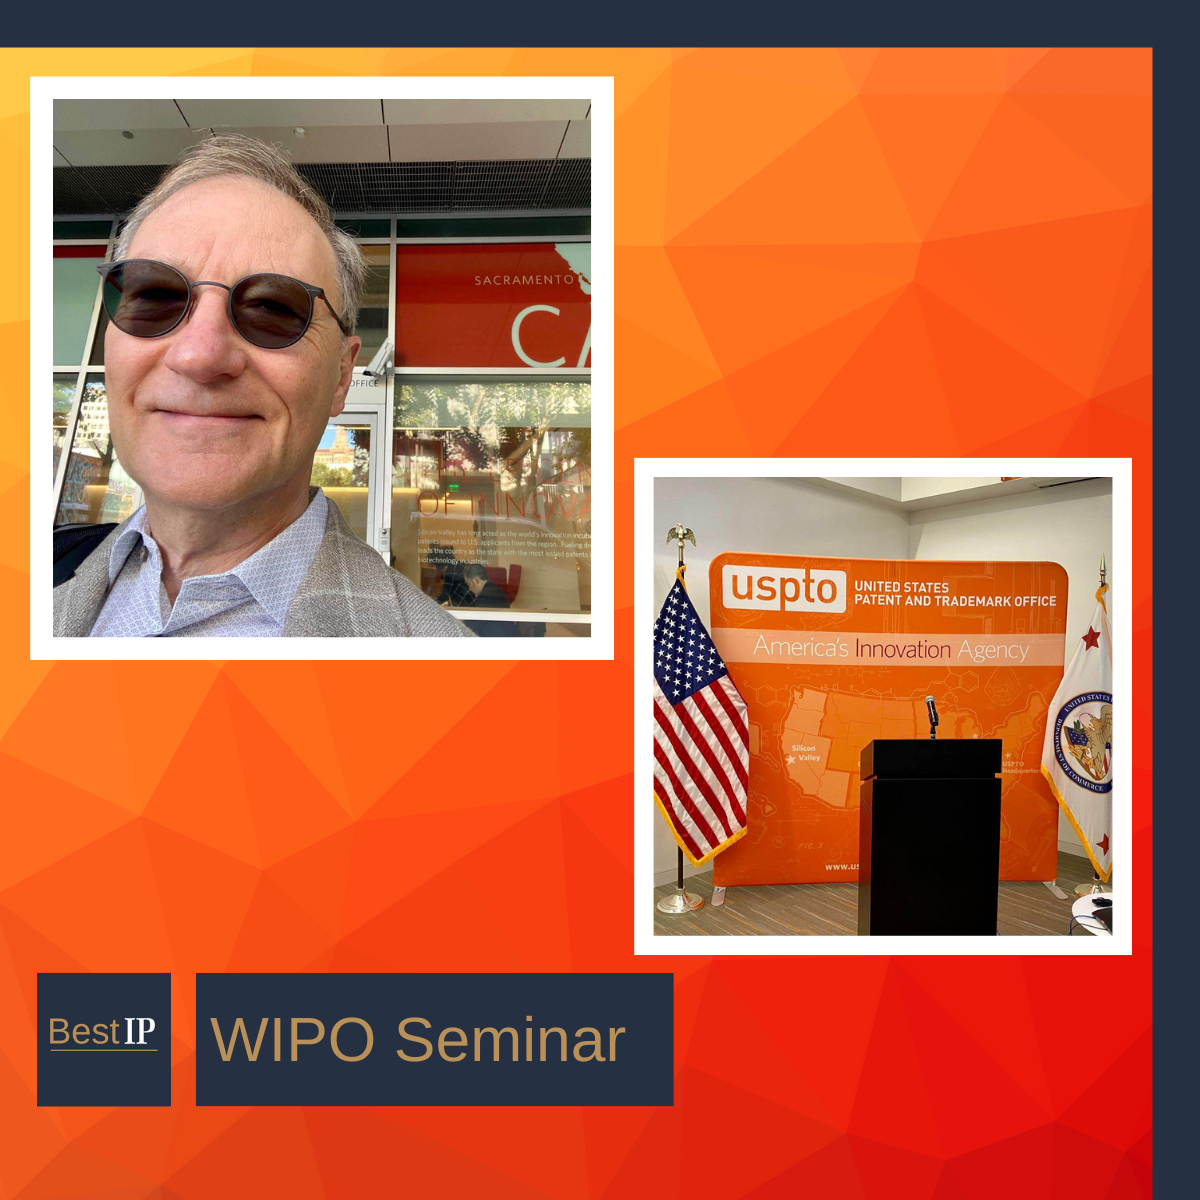 WIPO Seminar